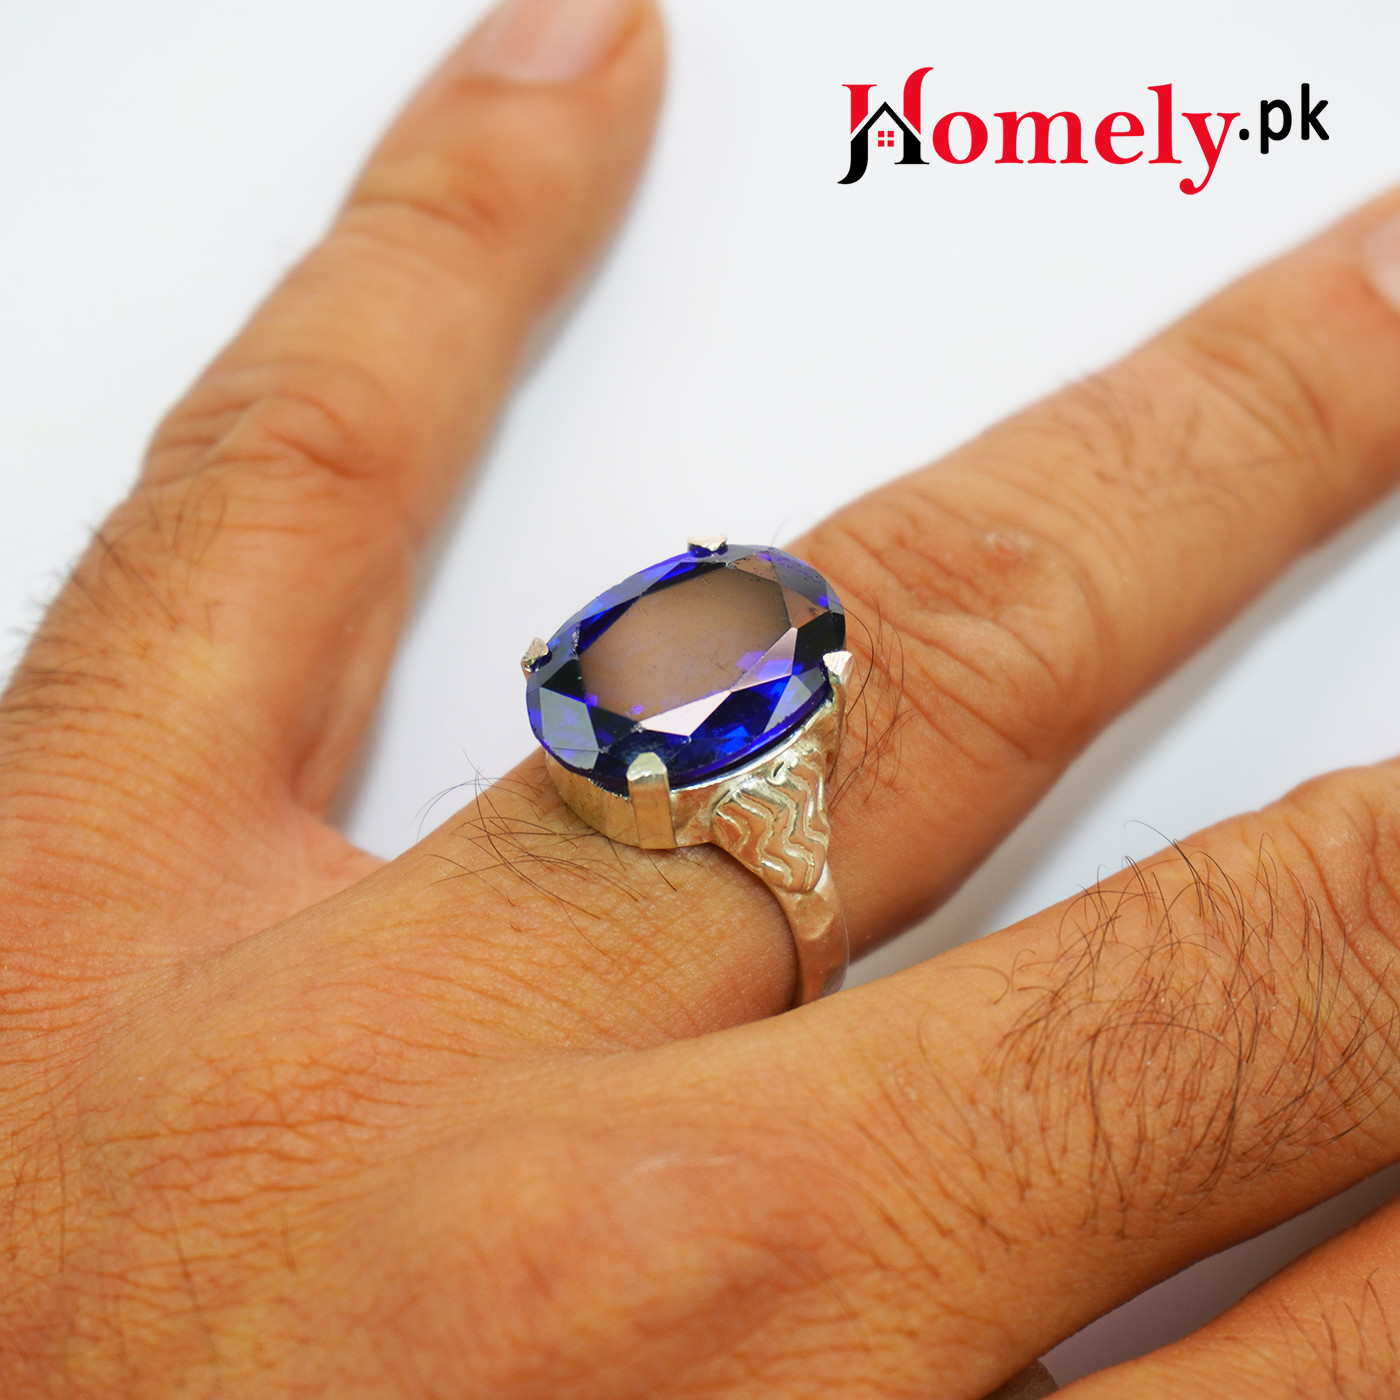 Chandi Jewelry: Real Aqeeq Turkish Silver Ring for Men